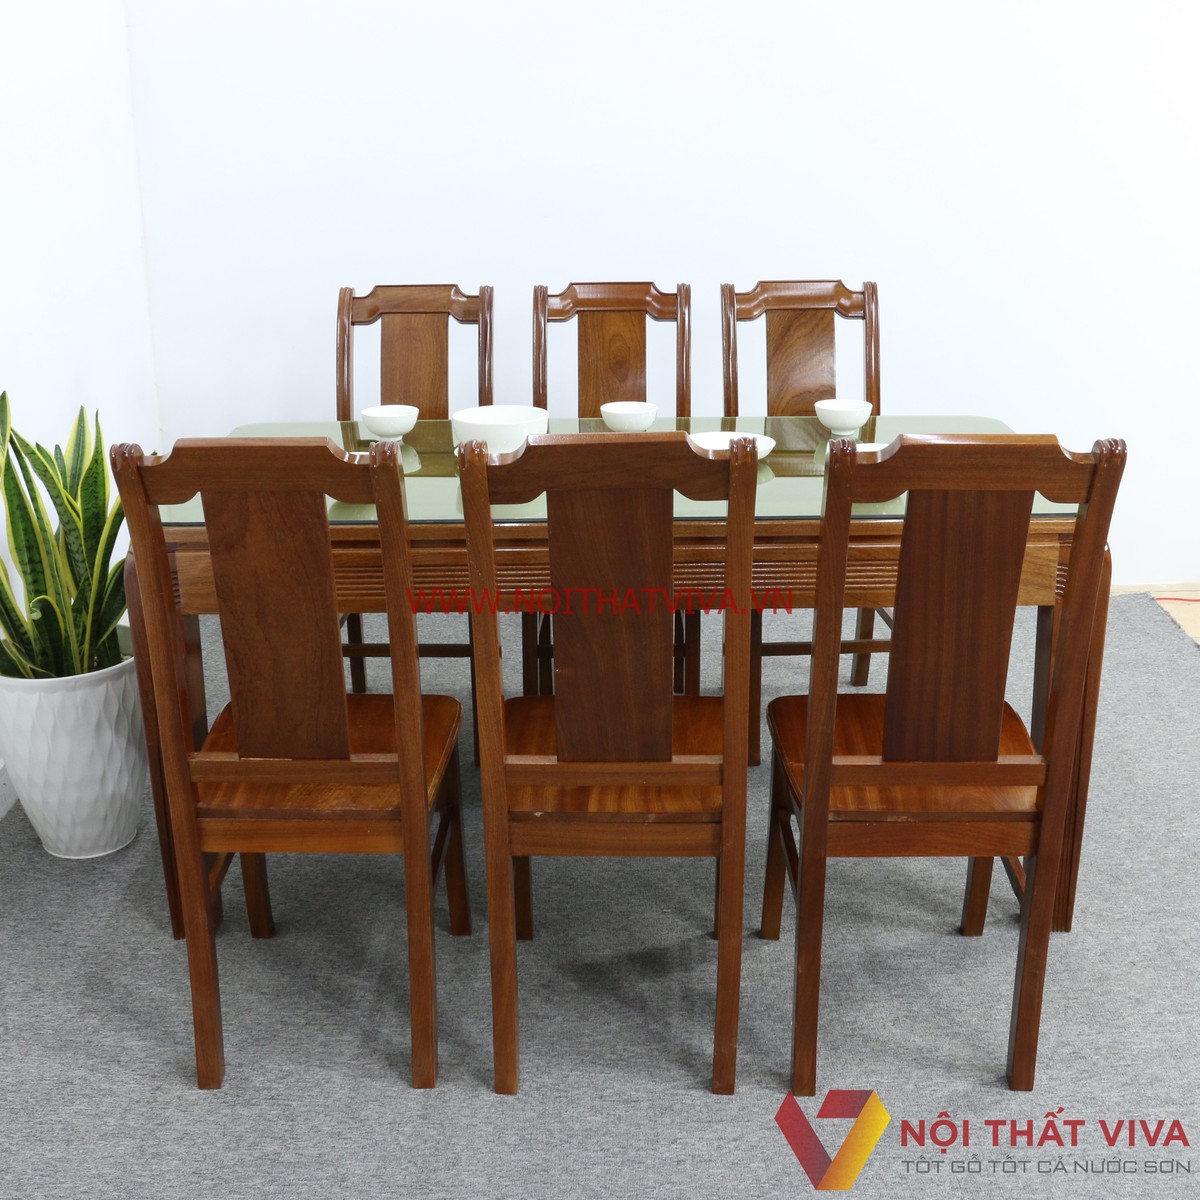 bàn ăn 6 ghế gỗ xoan đào